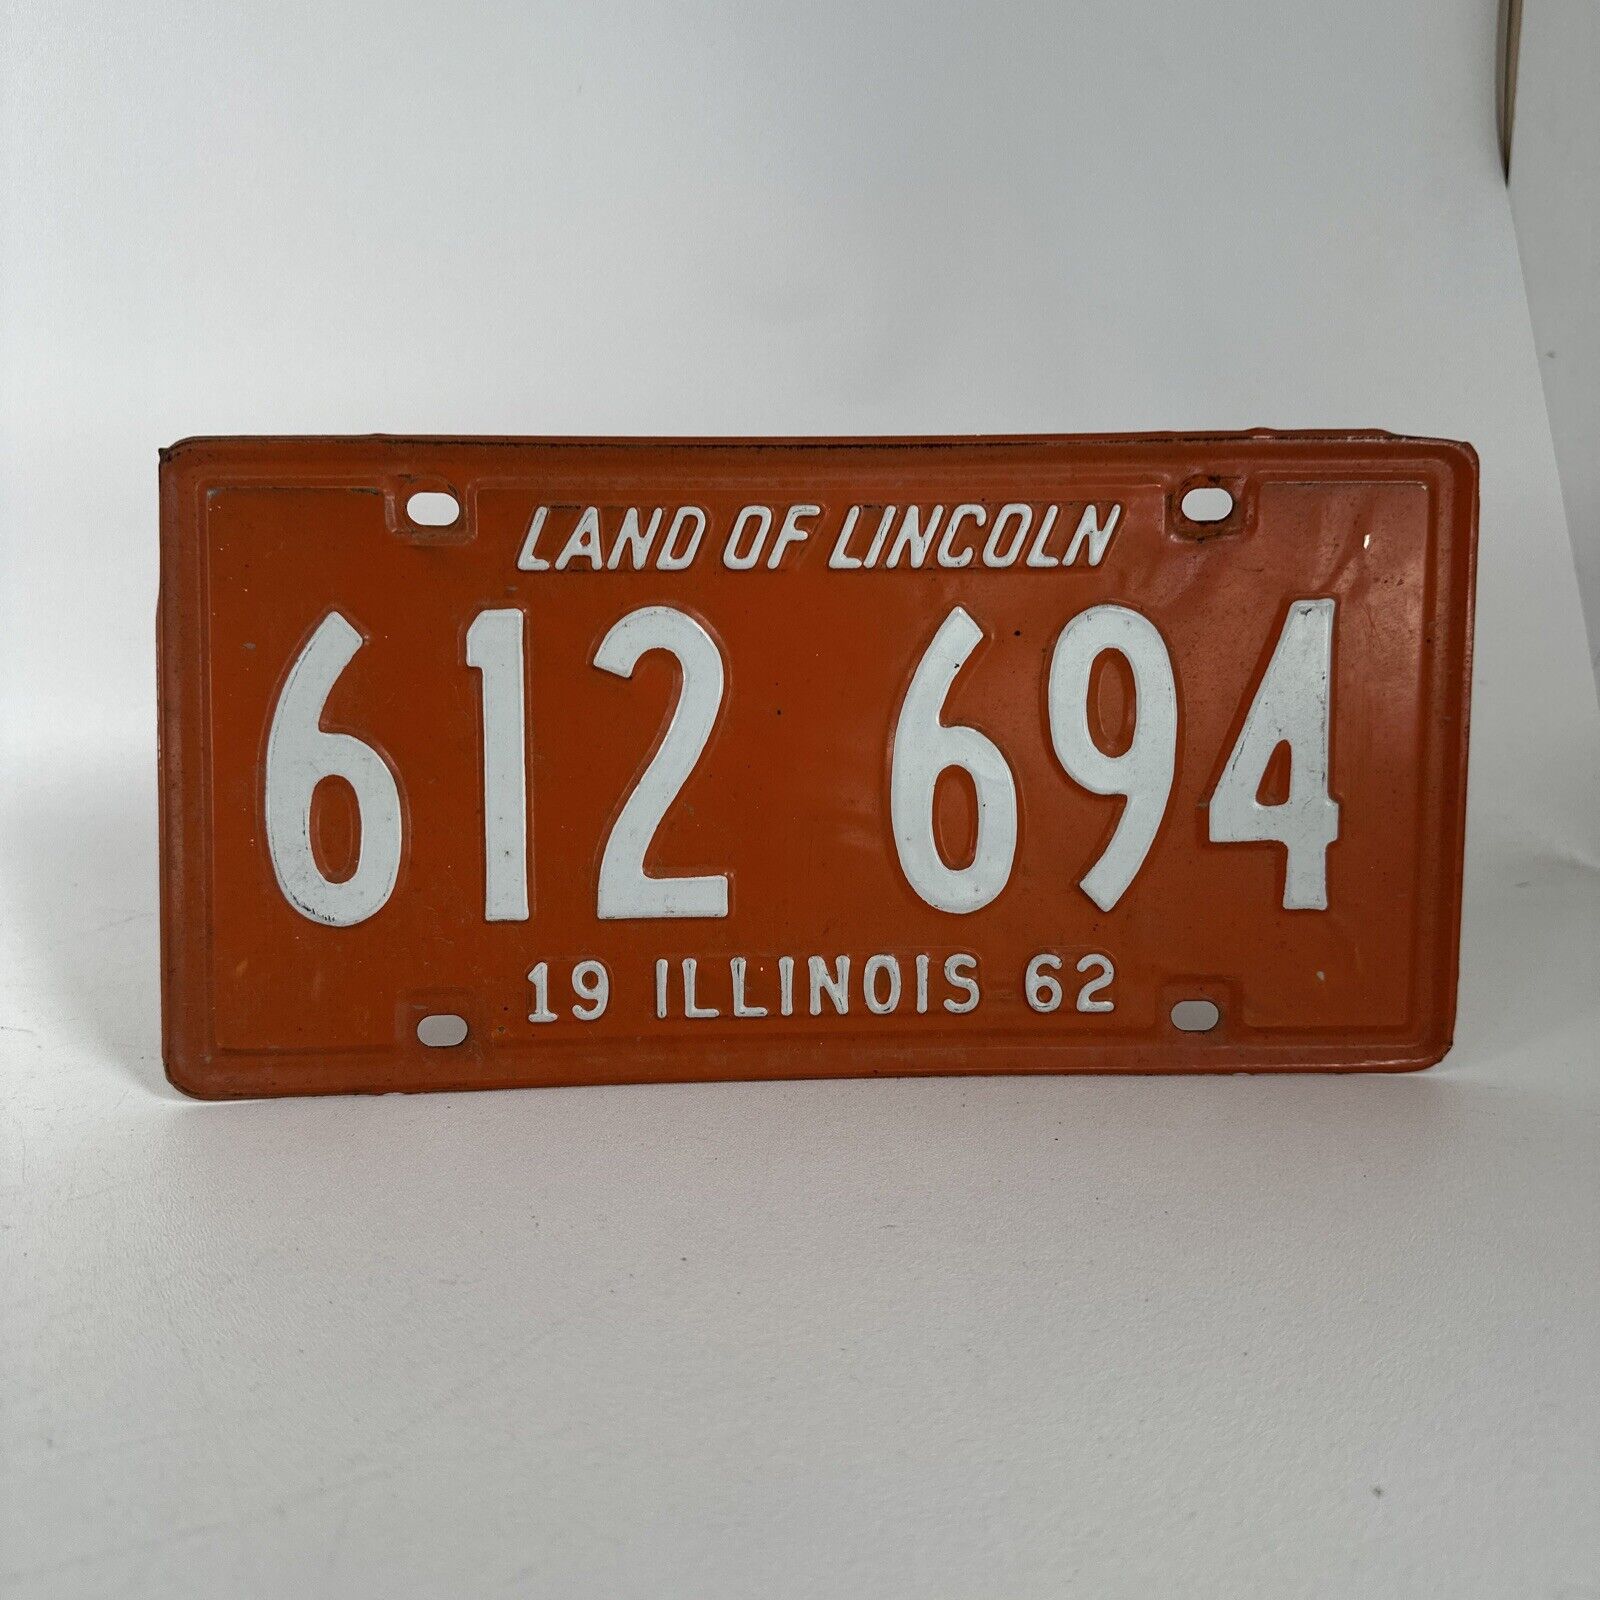 Illinois 1962 License Plate # 612 694